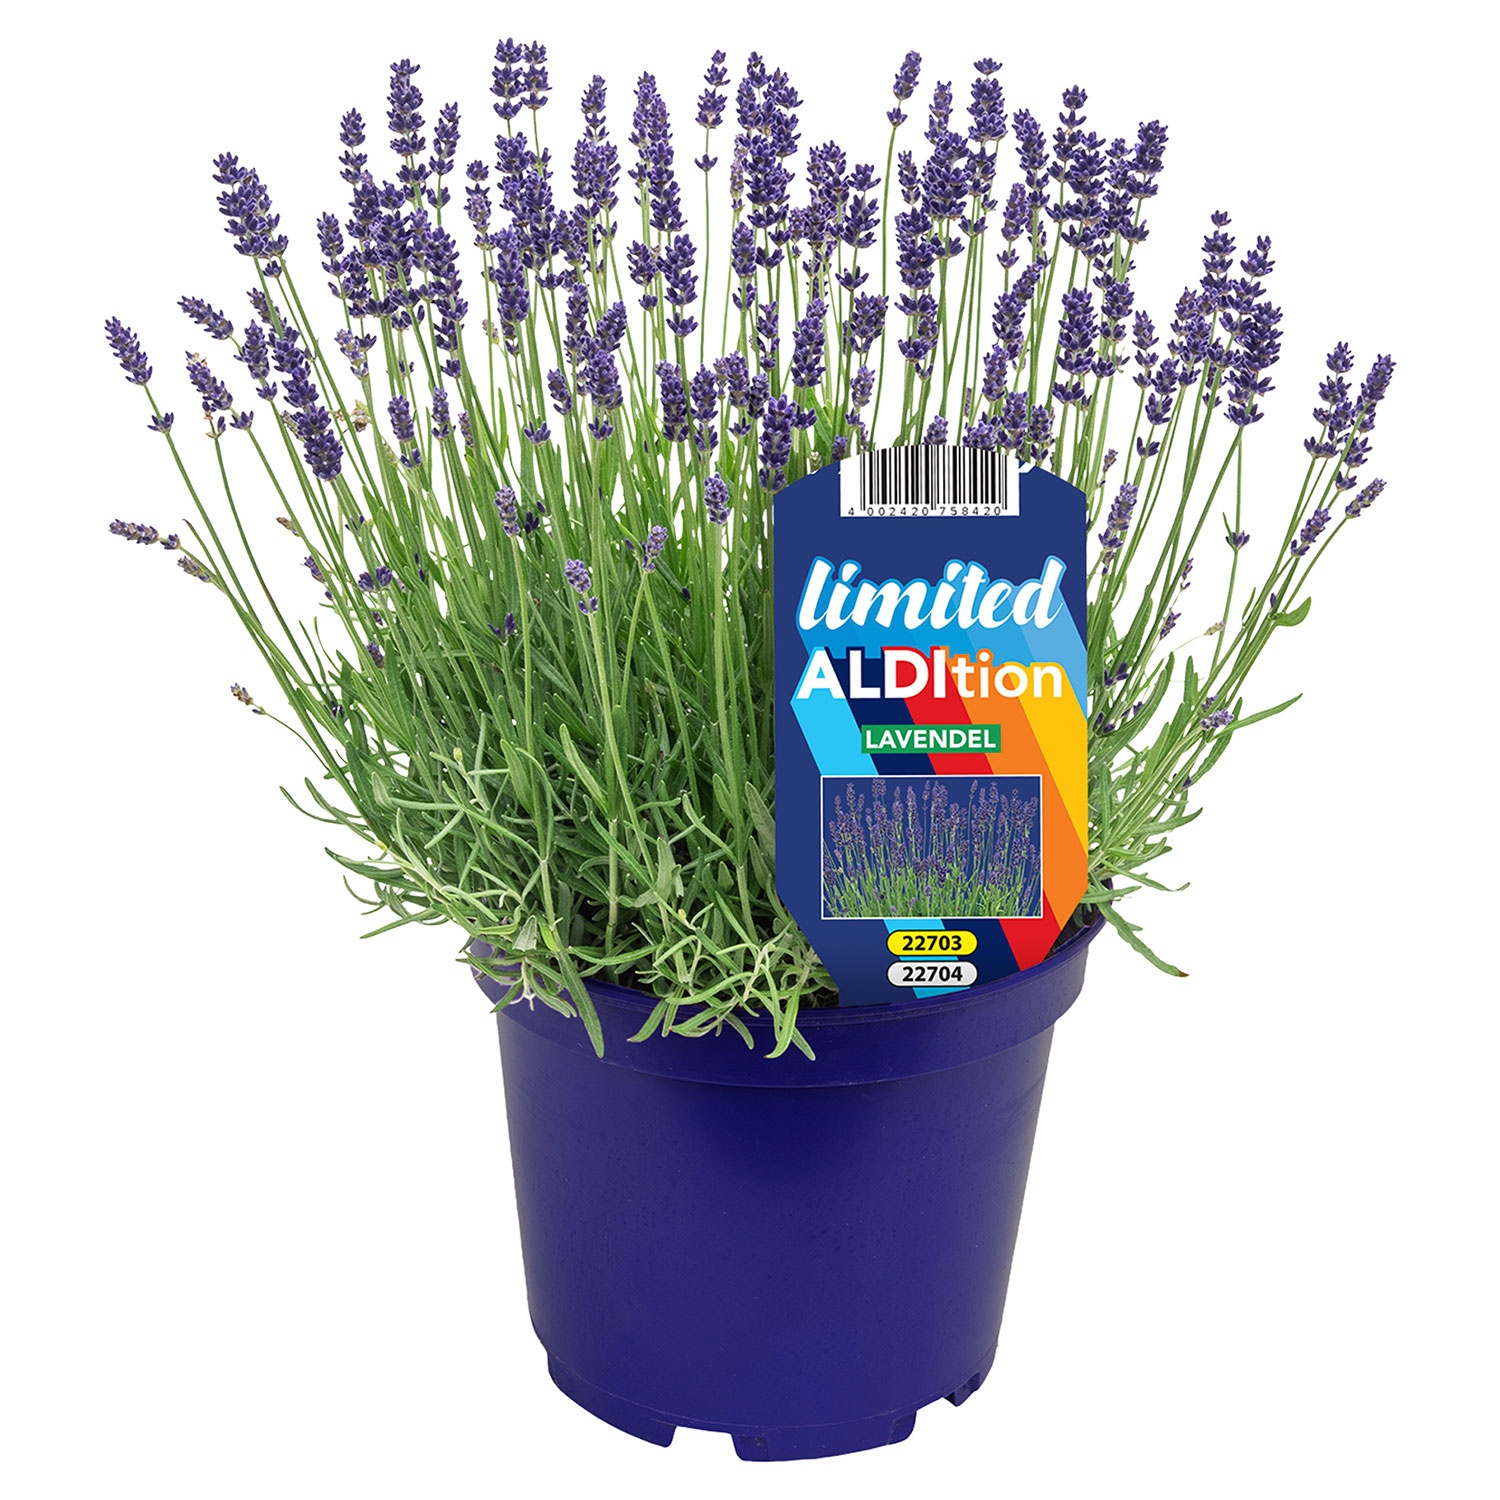  Lavendel angustifolia